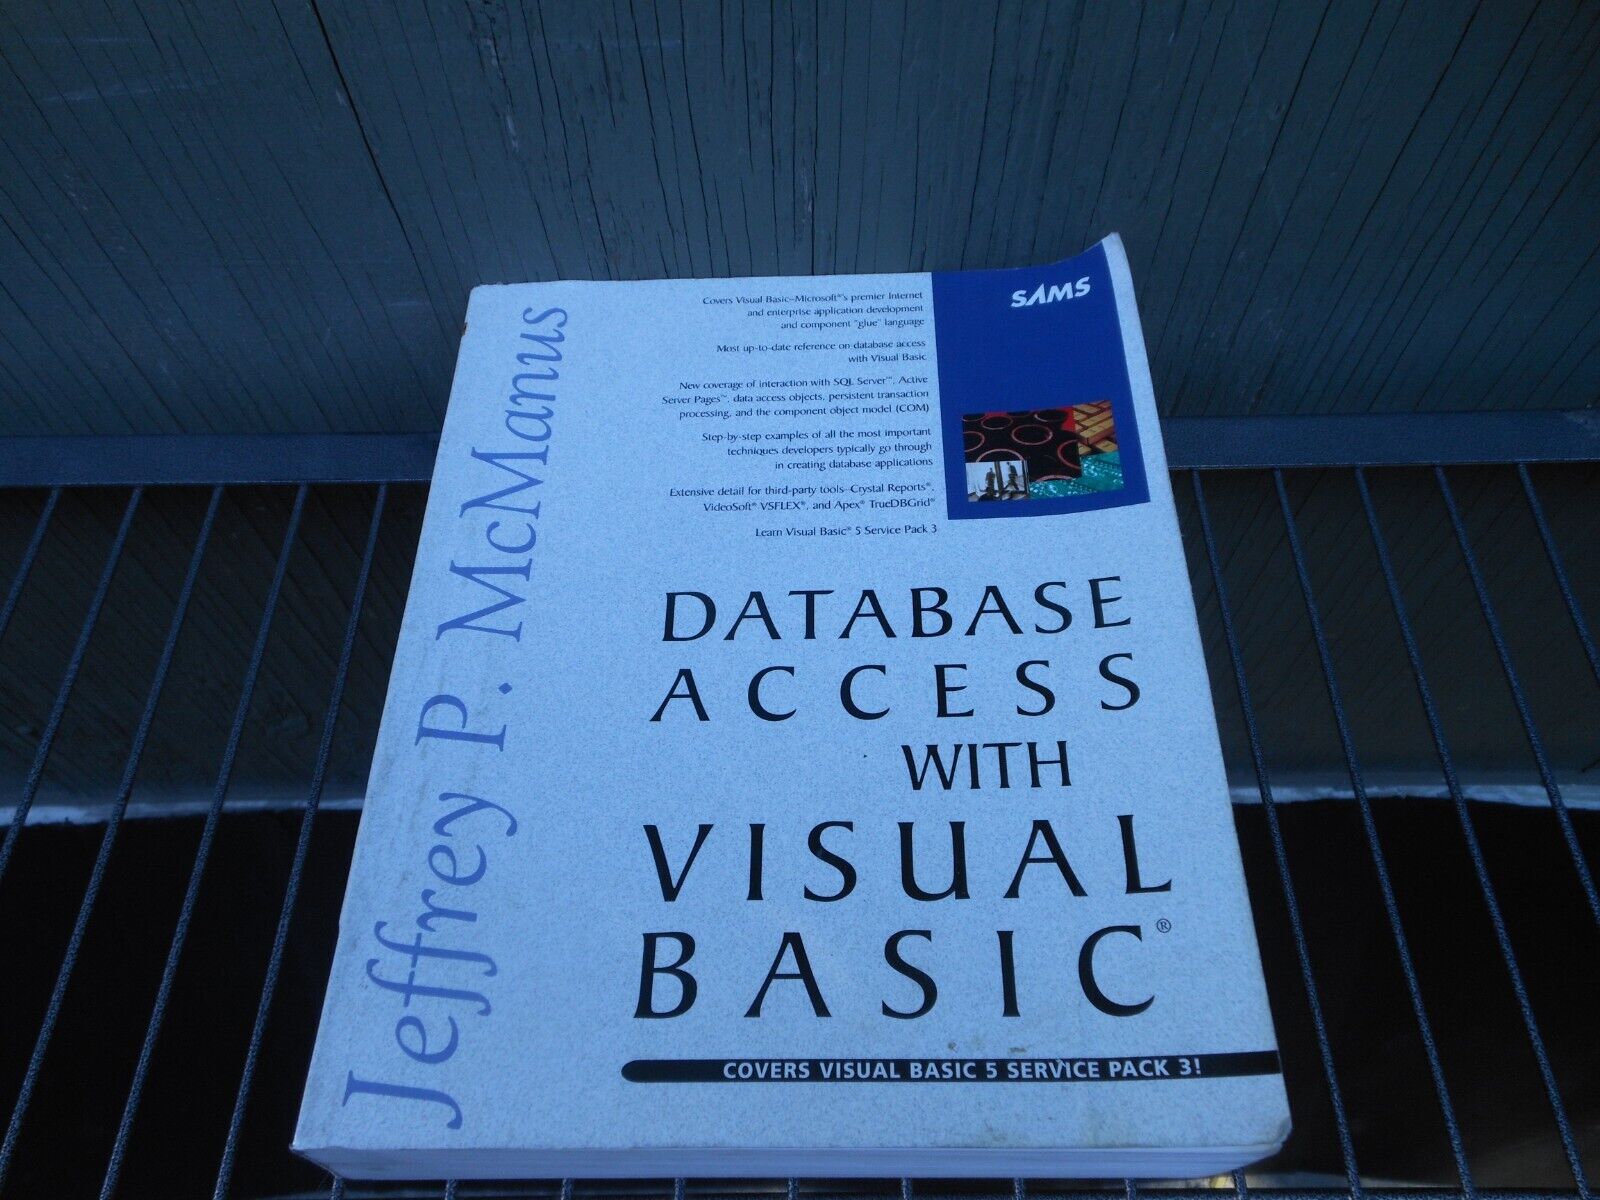 DATABASE ACCESS with VISUAL BASIC User Guide Manual & CD-ROM Set 1998 SAMS 12C